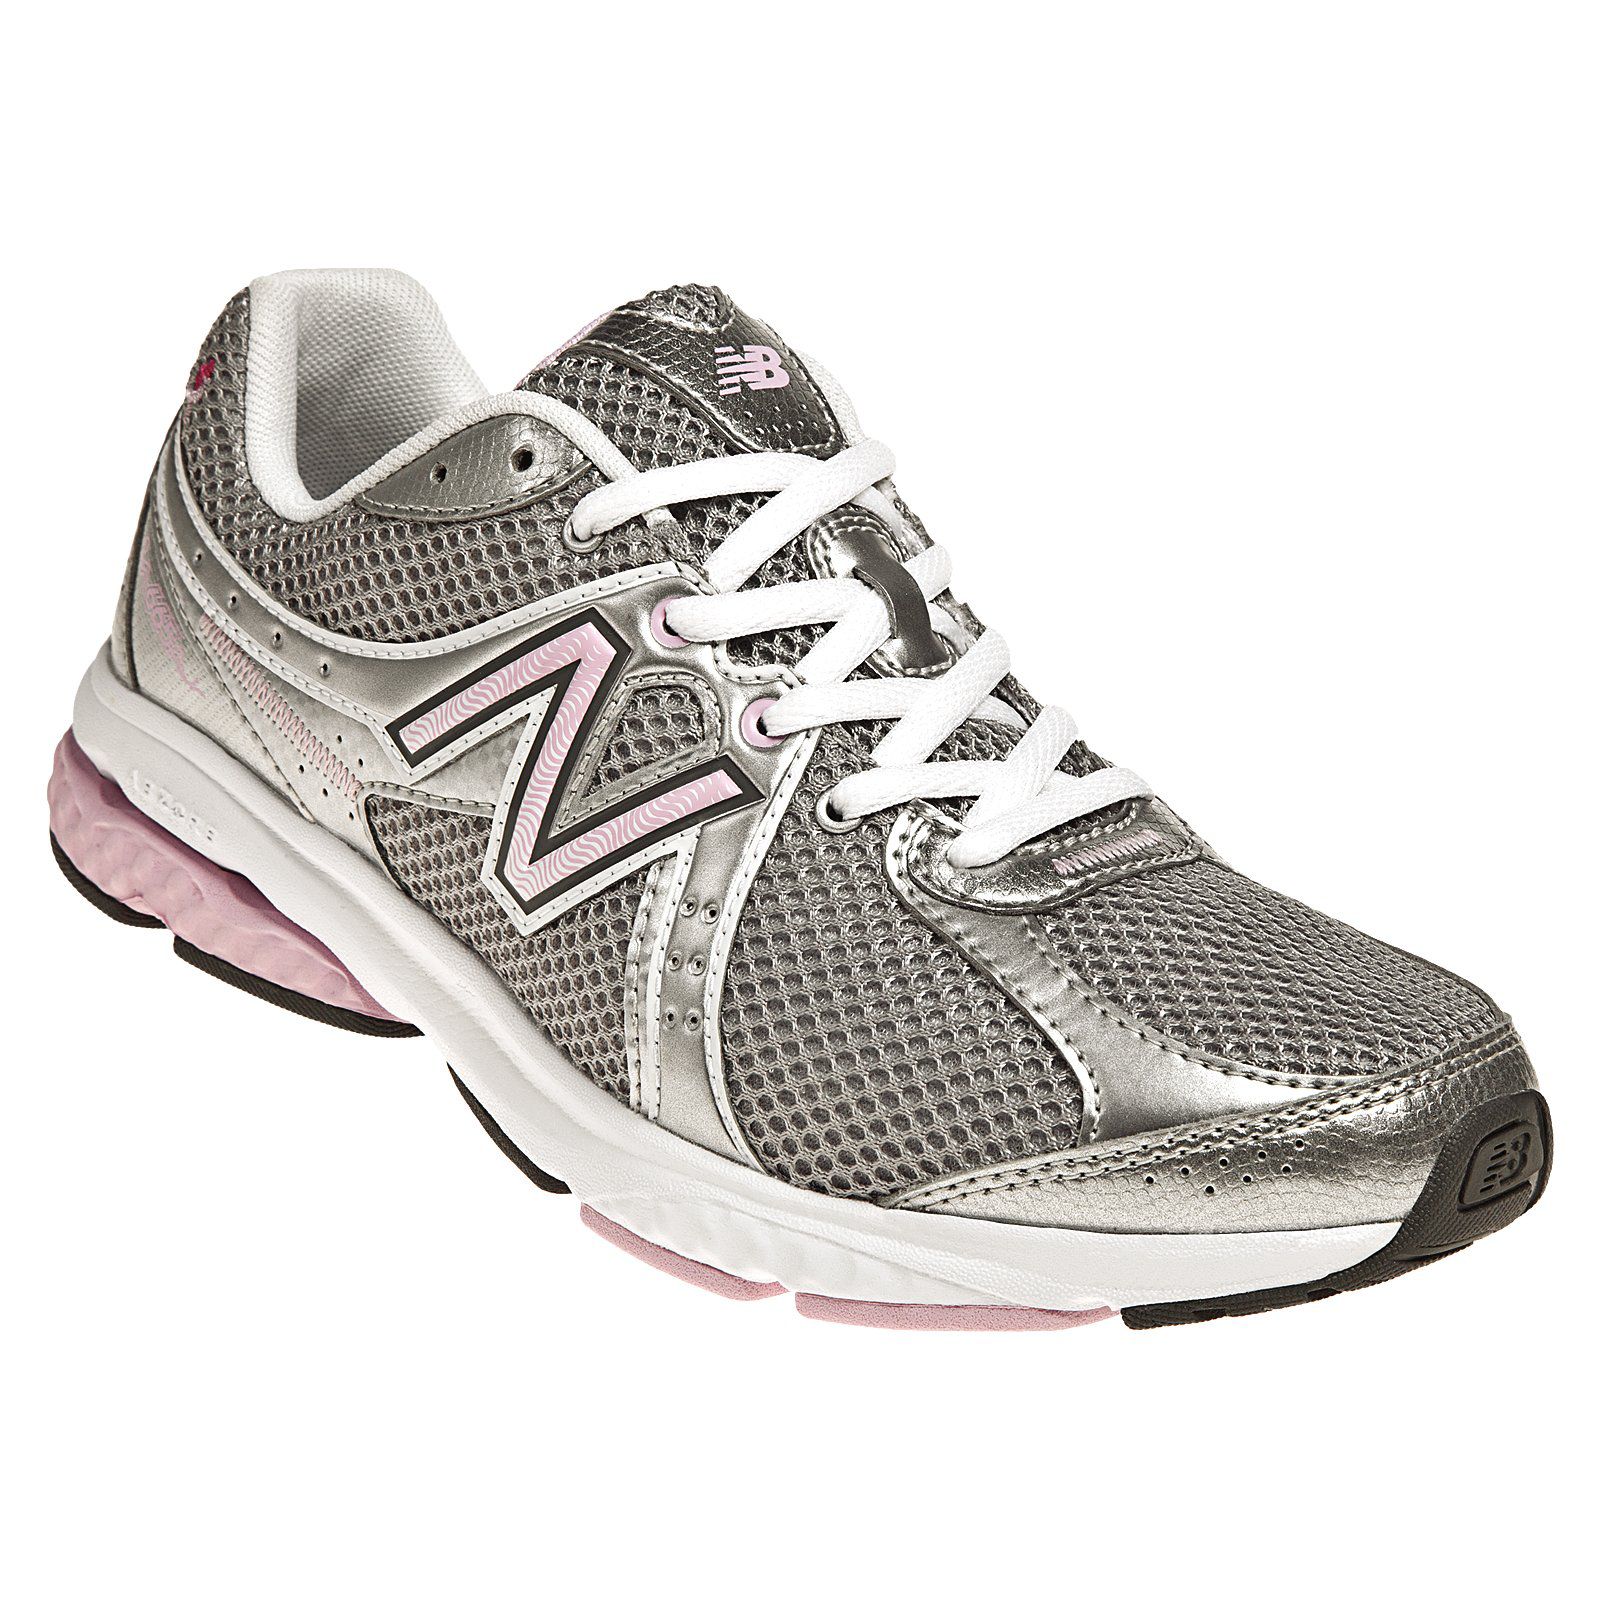 New Balance Women's 665 Komen Walking Athletic Shoe Wide Avail - Silver/Pink